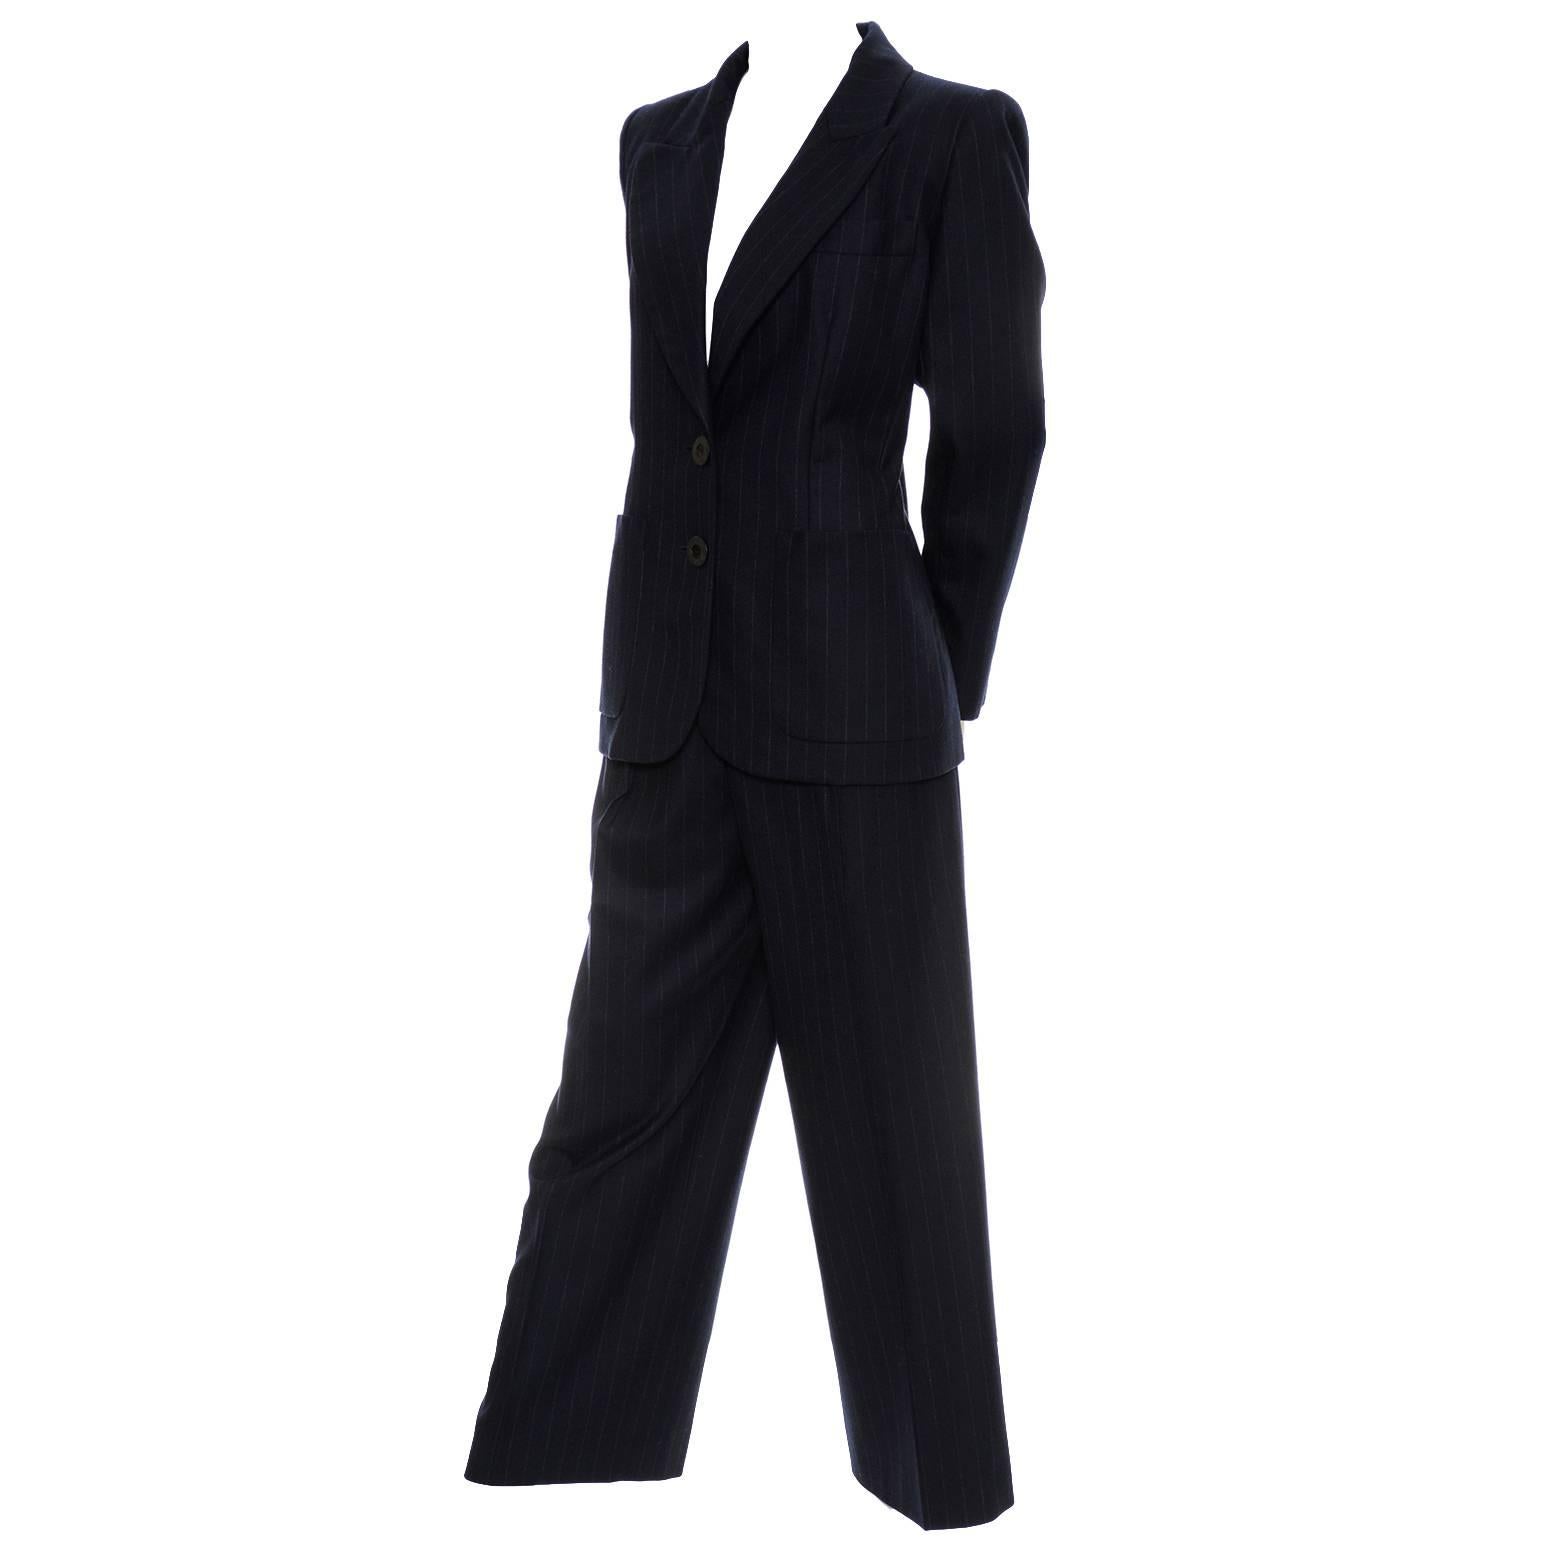 Yves Saint Laurent YSL Vintage Pinstripe Trouser Pant Suit in Cashmere & Wool 40